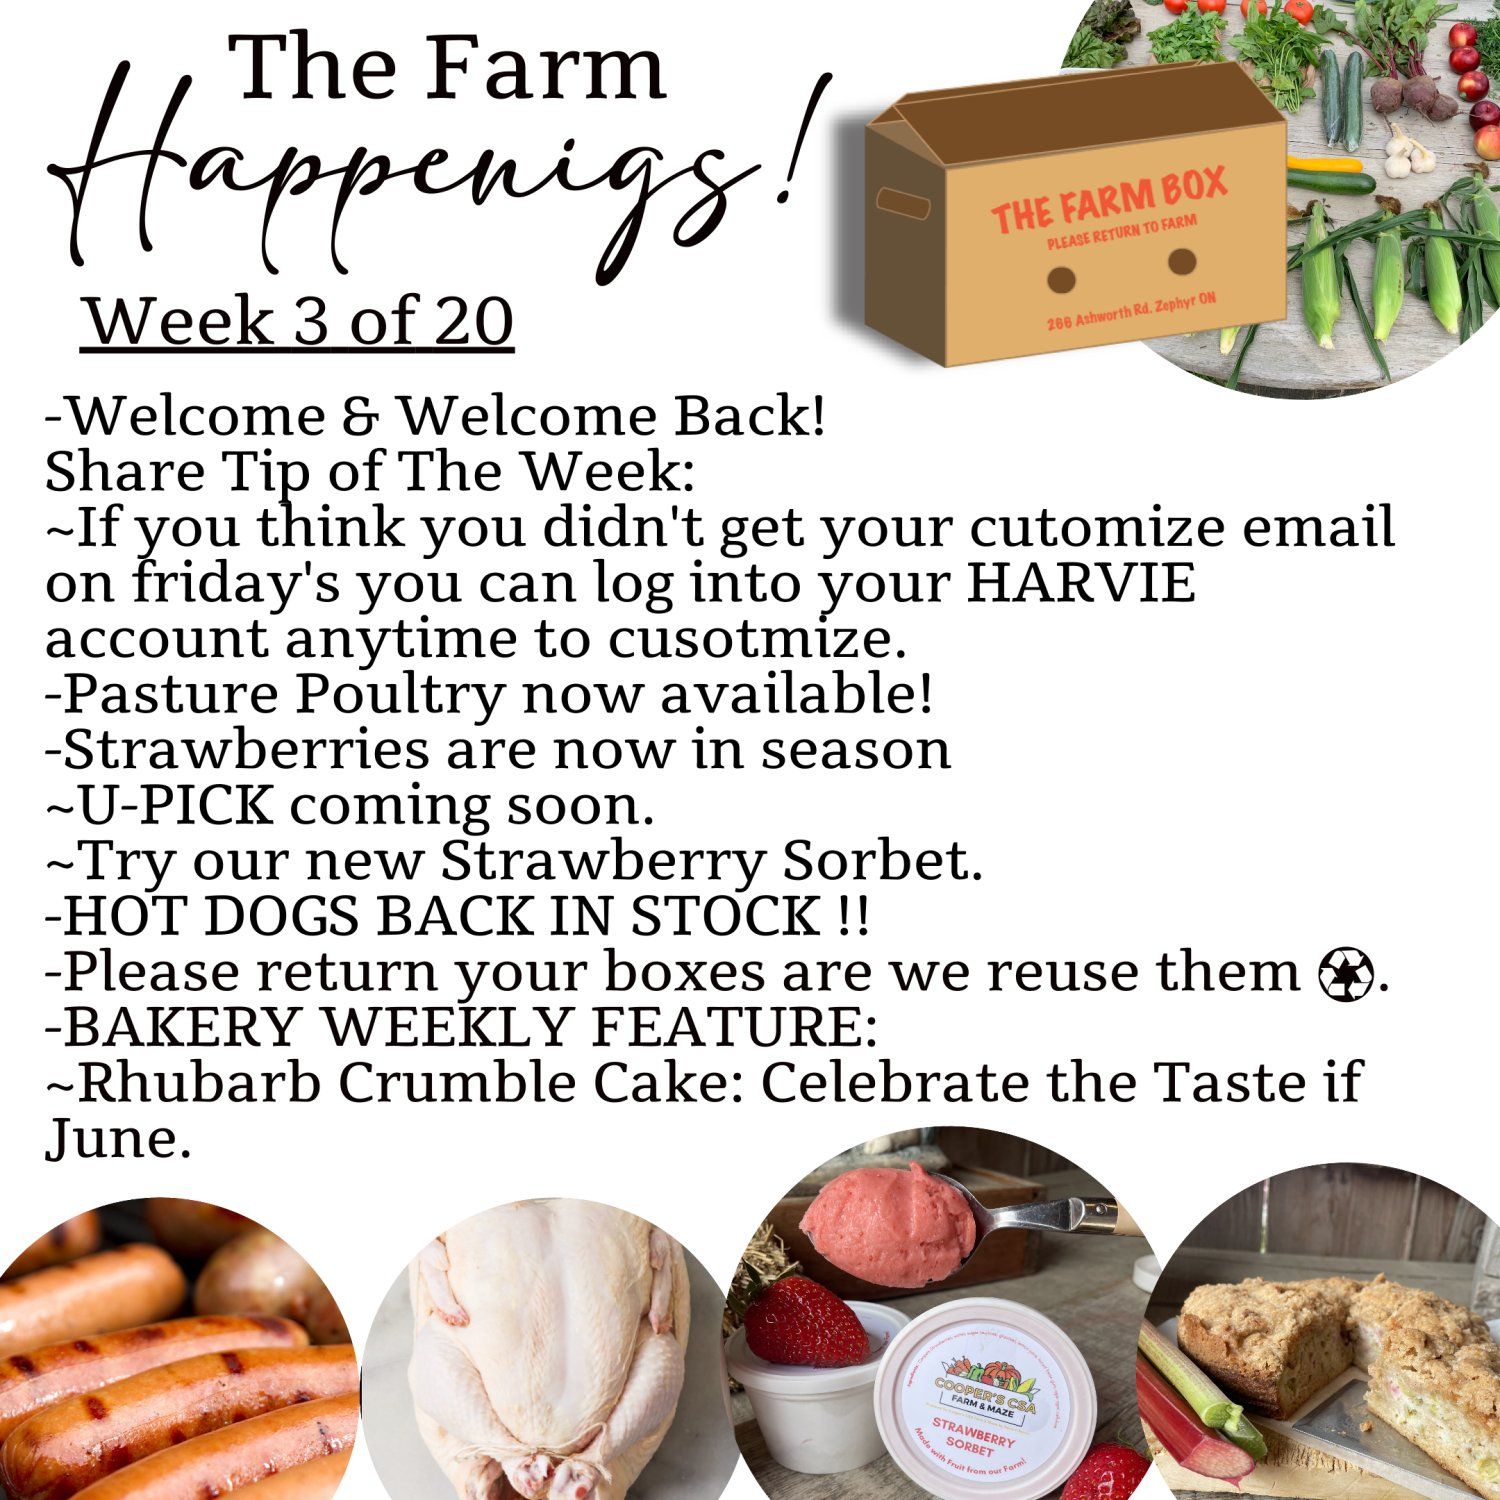 "The Farm Box"-Coopers CSA Farm Farm Happenings Week 3 of 20